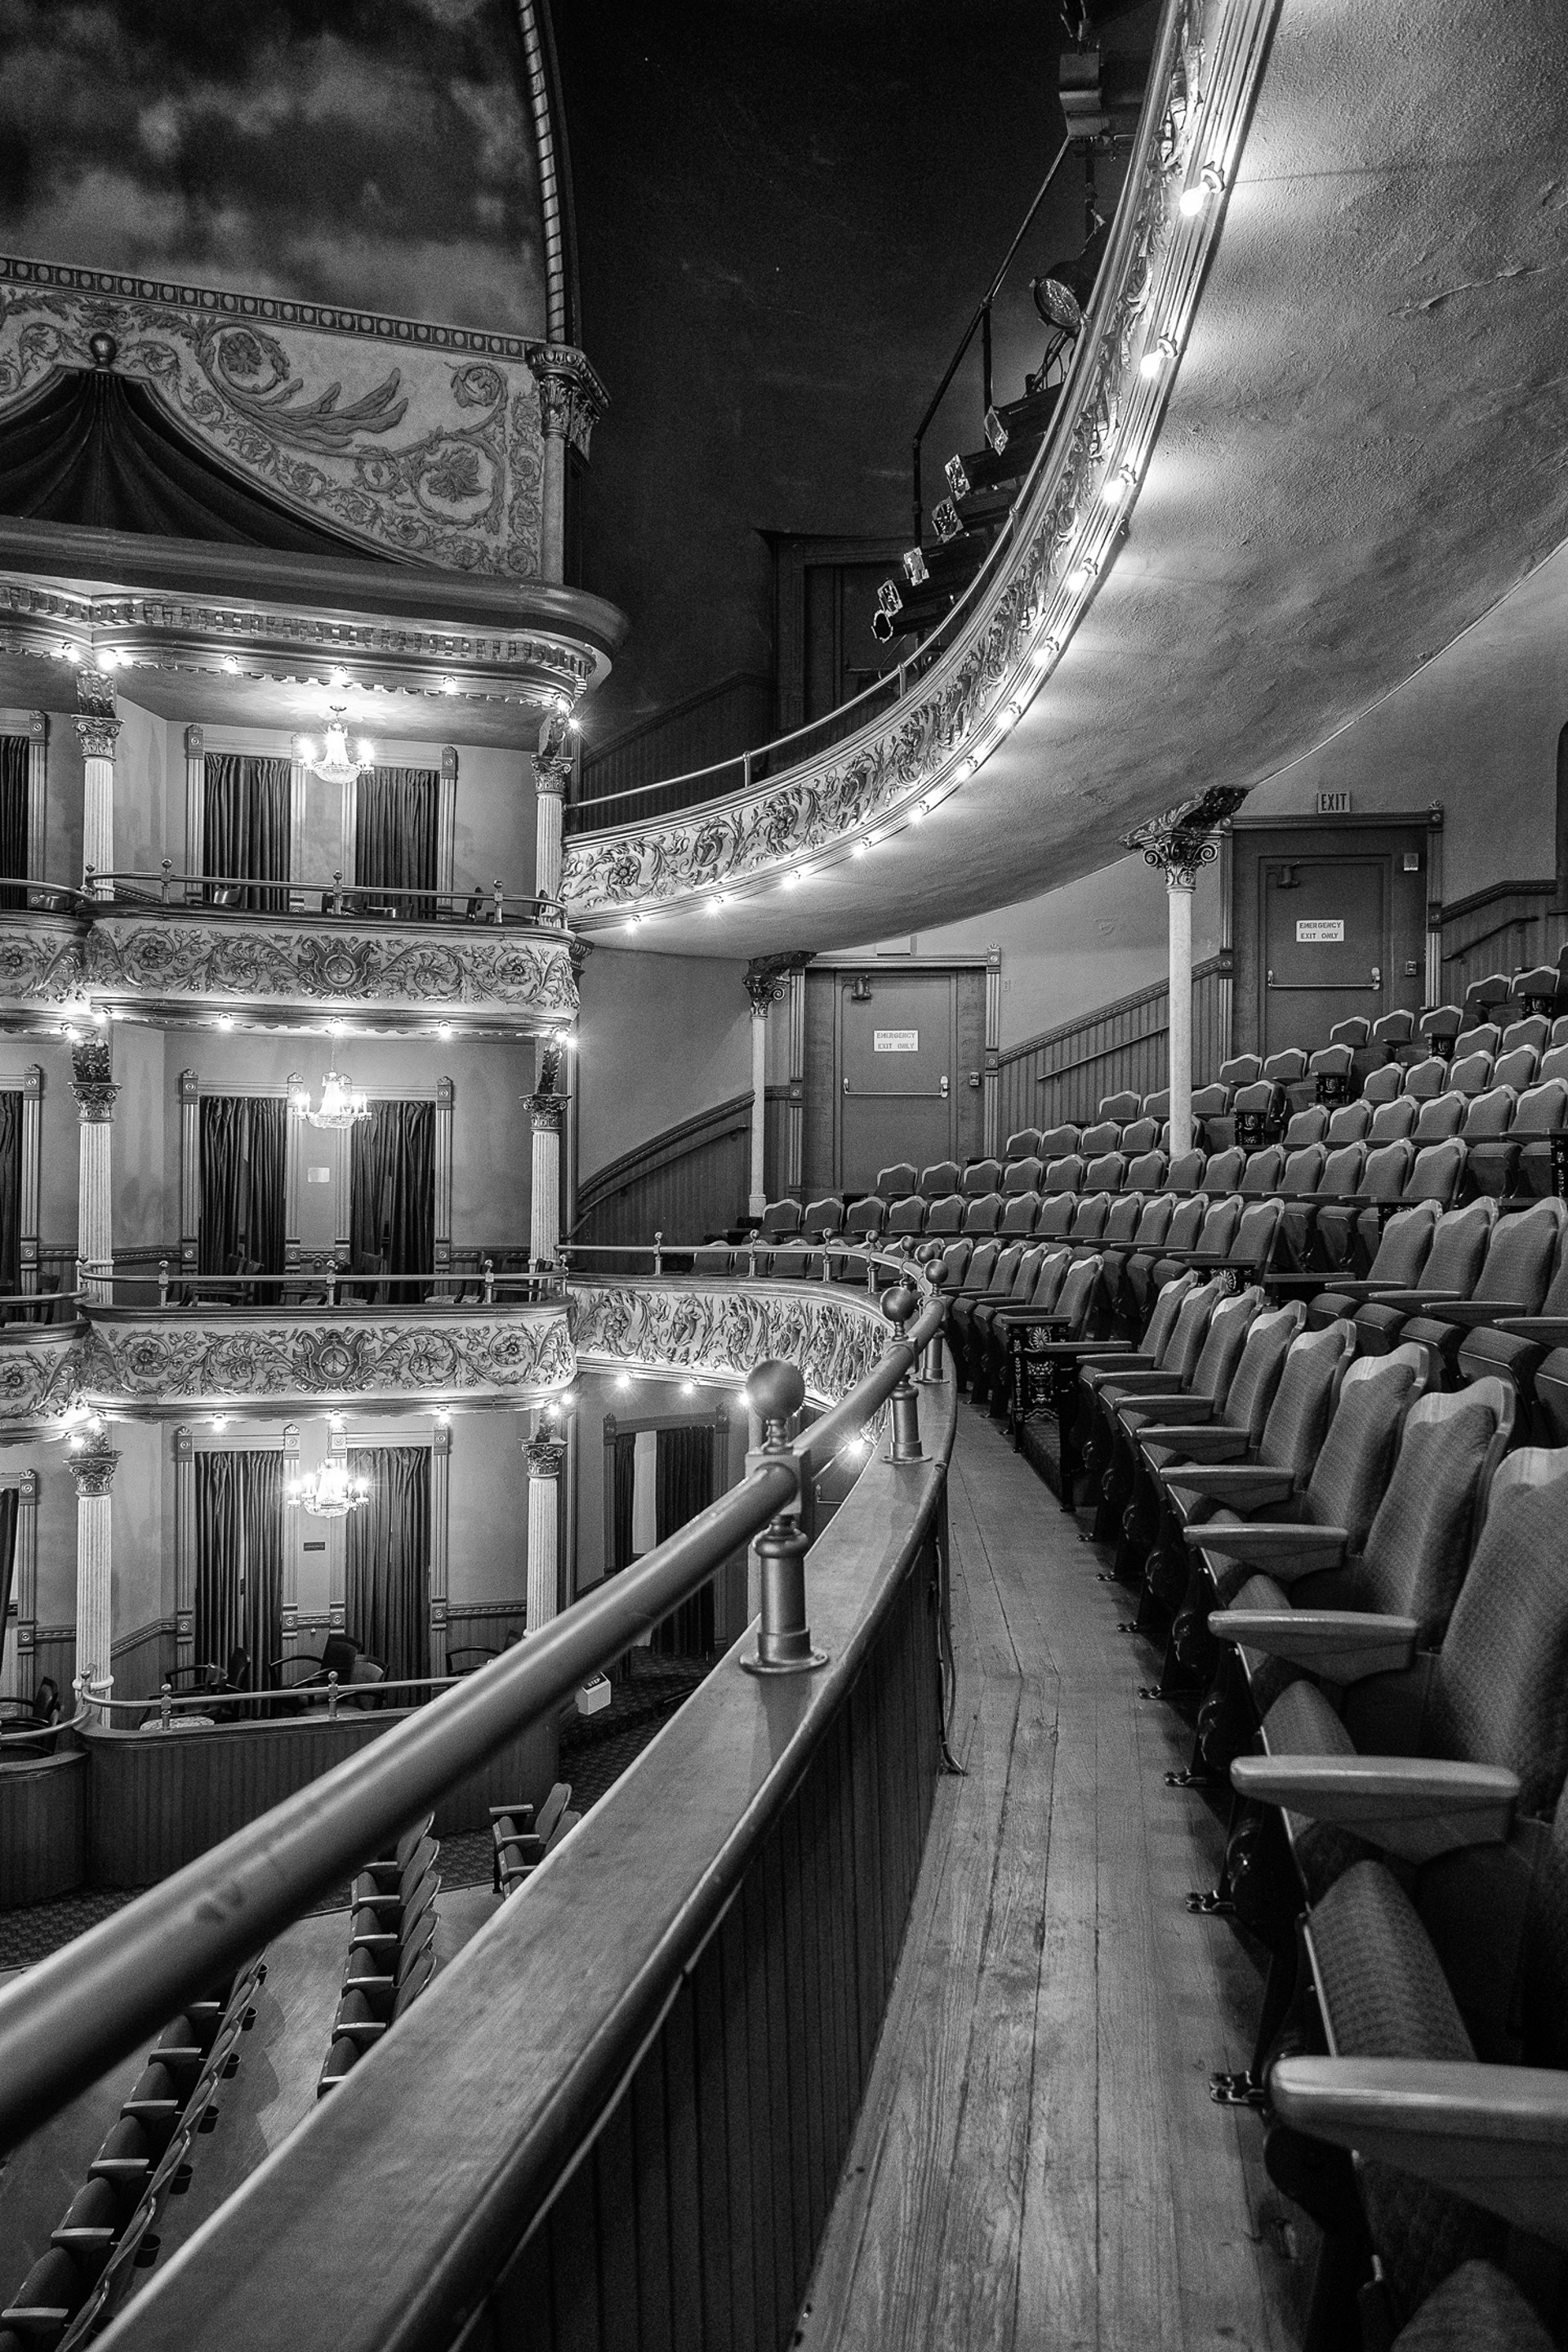 First Balcony & Box Seats - Grand Opera House by Myrtie Cope